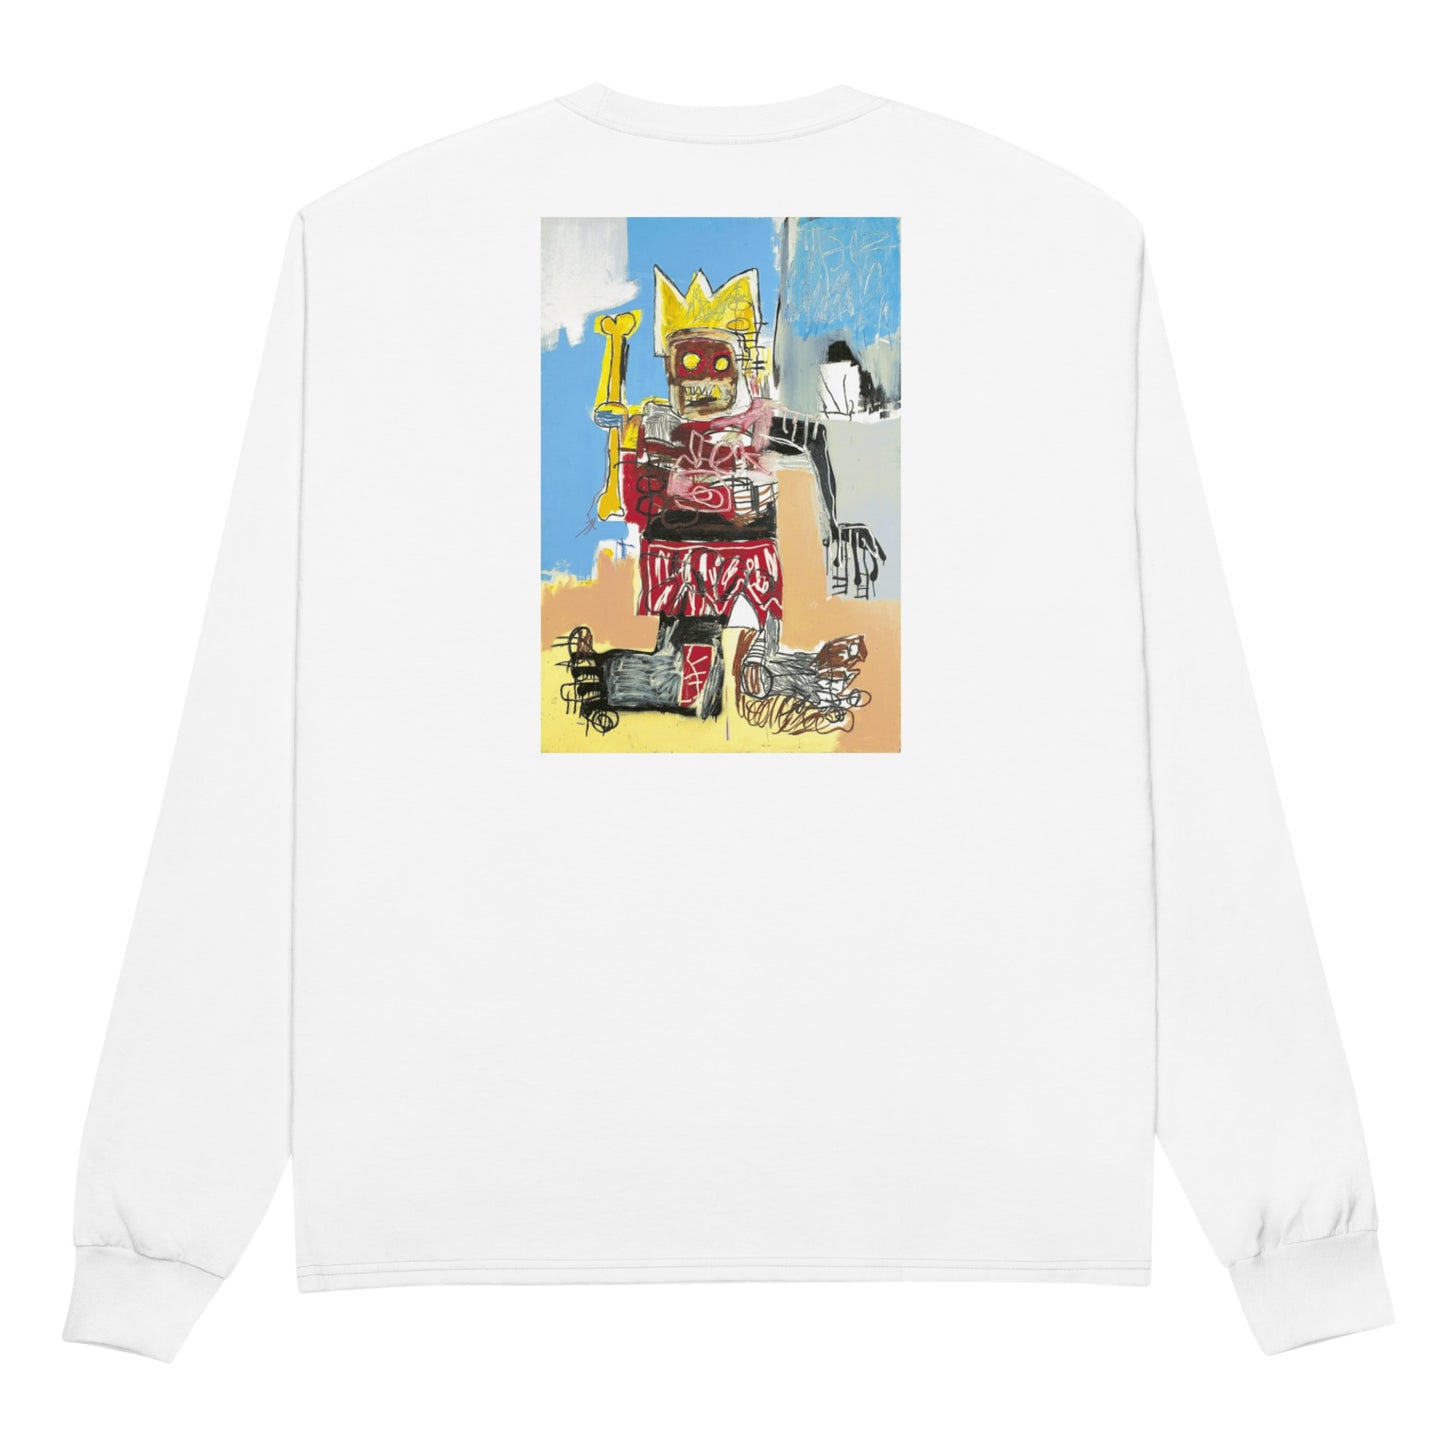 Jean-Michel Basquiat "Untitled" Artwork Embroidered + Printed Premium Champion Streetwear Long Sleeve Shirt White